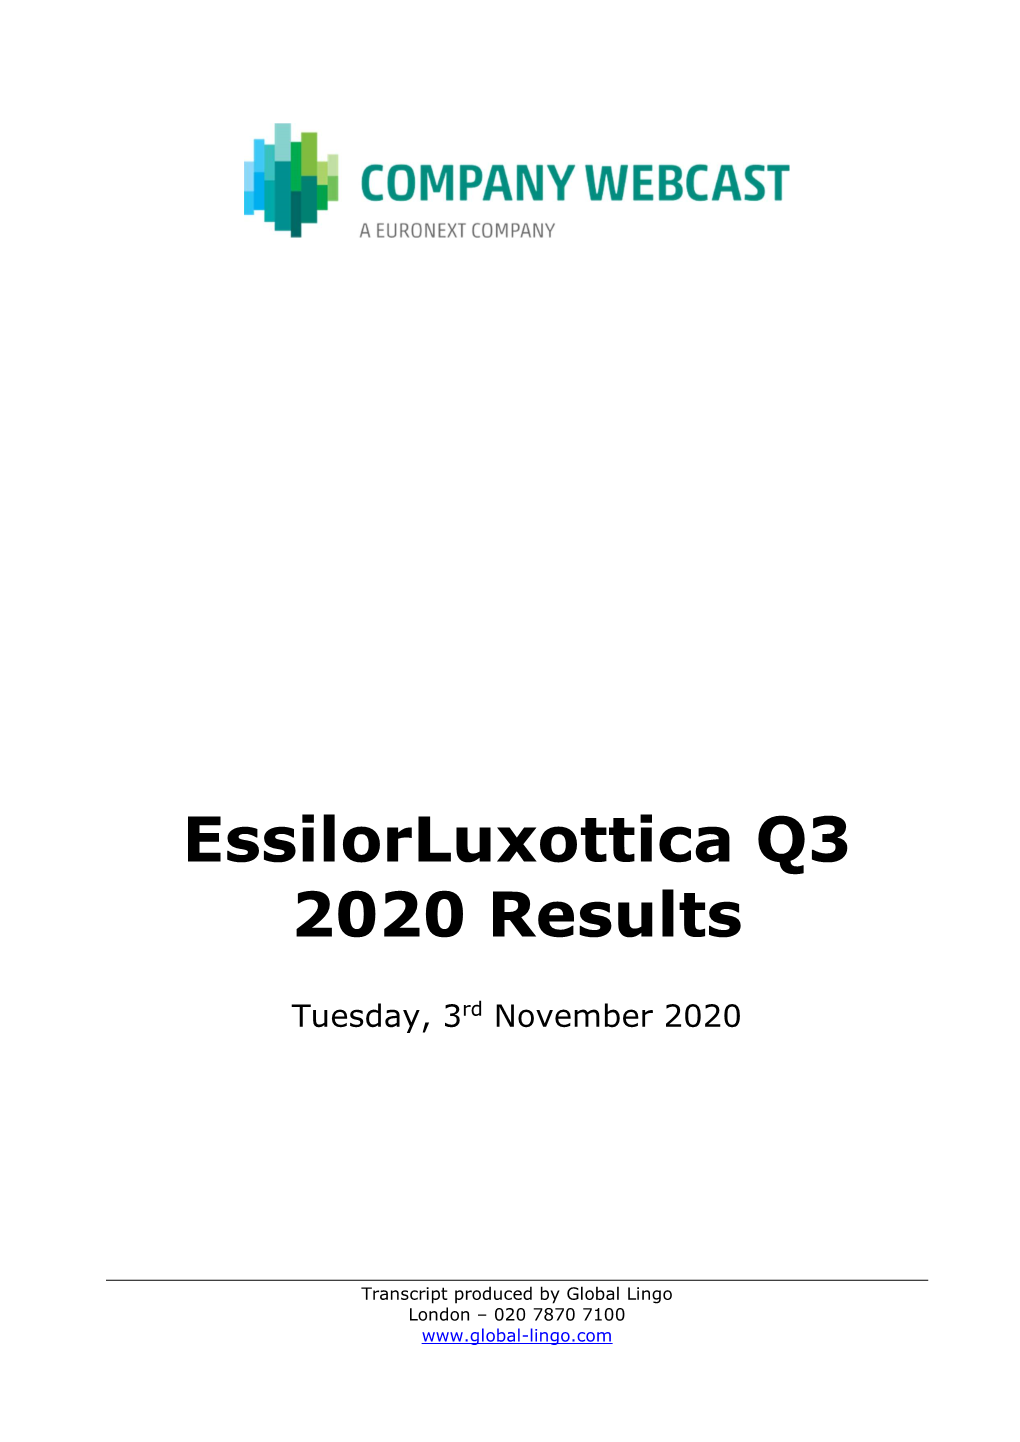 Essilorluxottica Q3 2020 Results